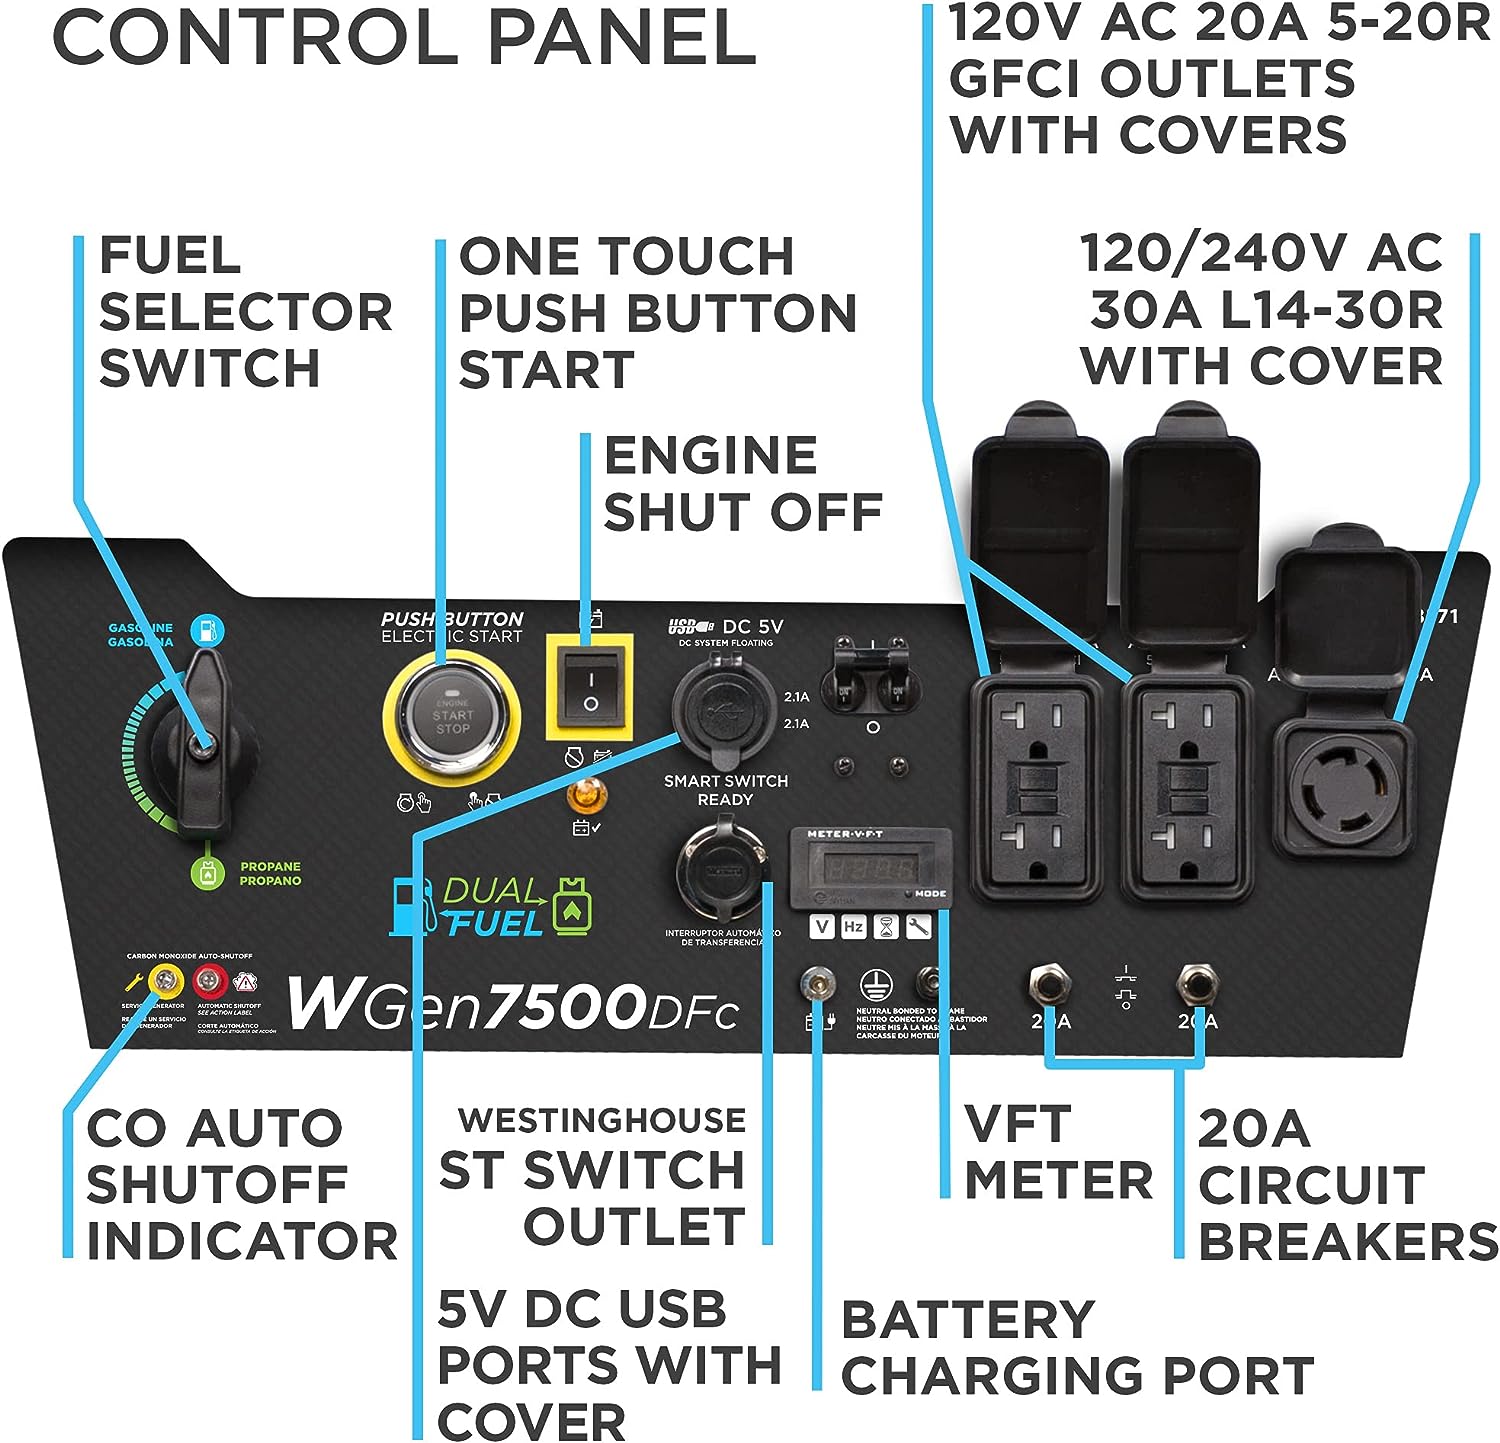 Westinghouse WGen7500DFc Generator 7500W/9500W 30 Amp Remote Start Dual Fuel with CO Sensor New